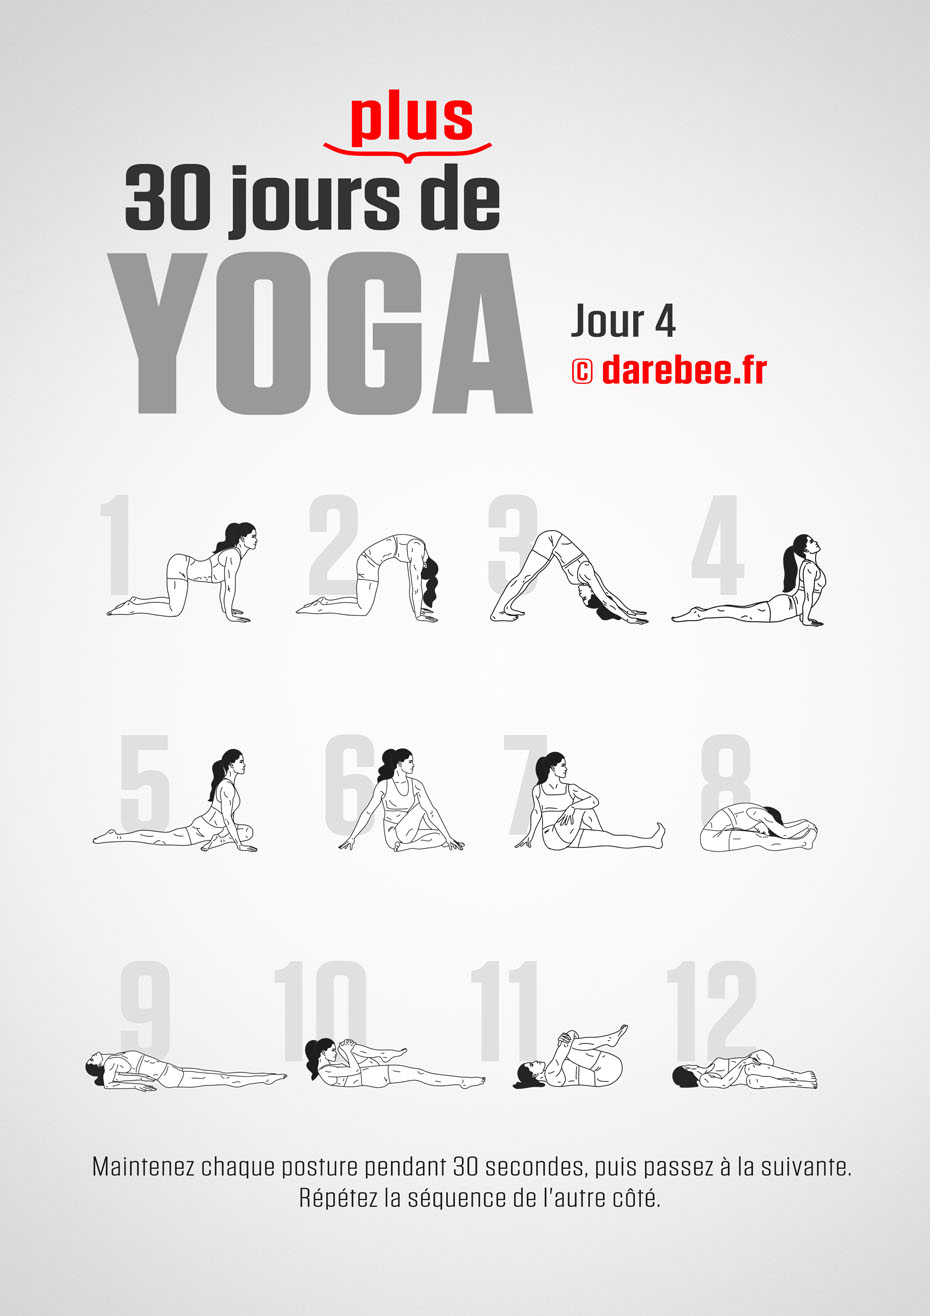 30 Days More of Yoga - Program by DAREBEE